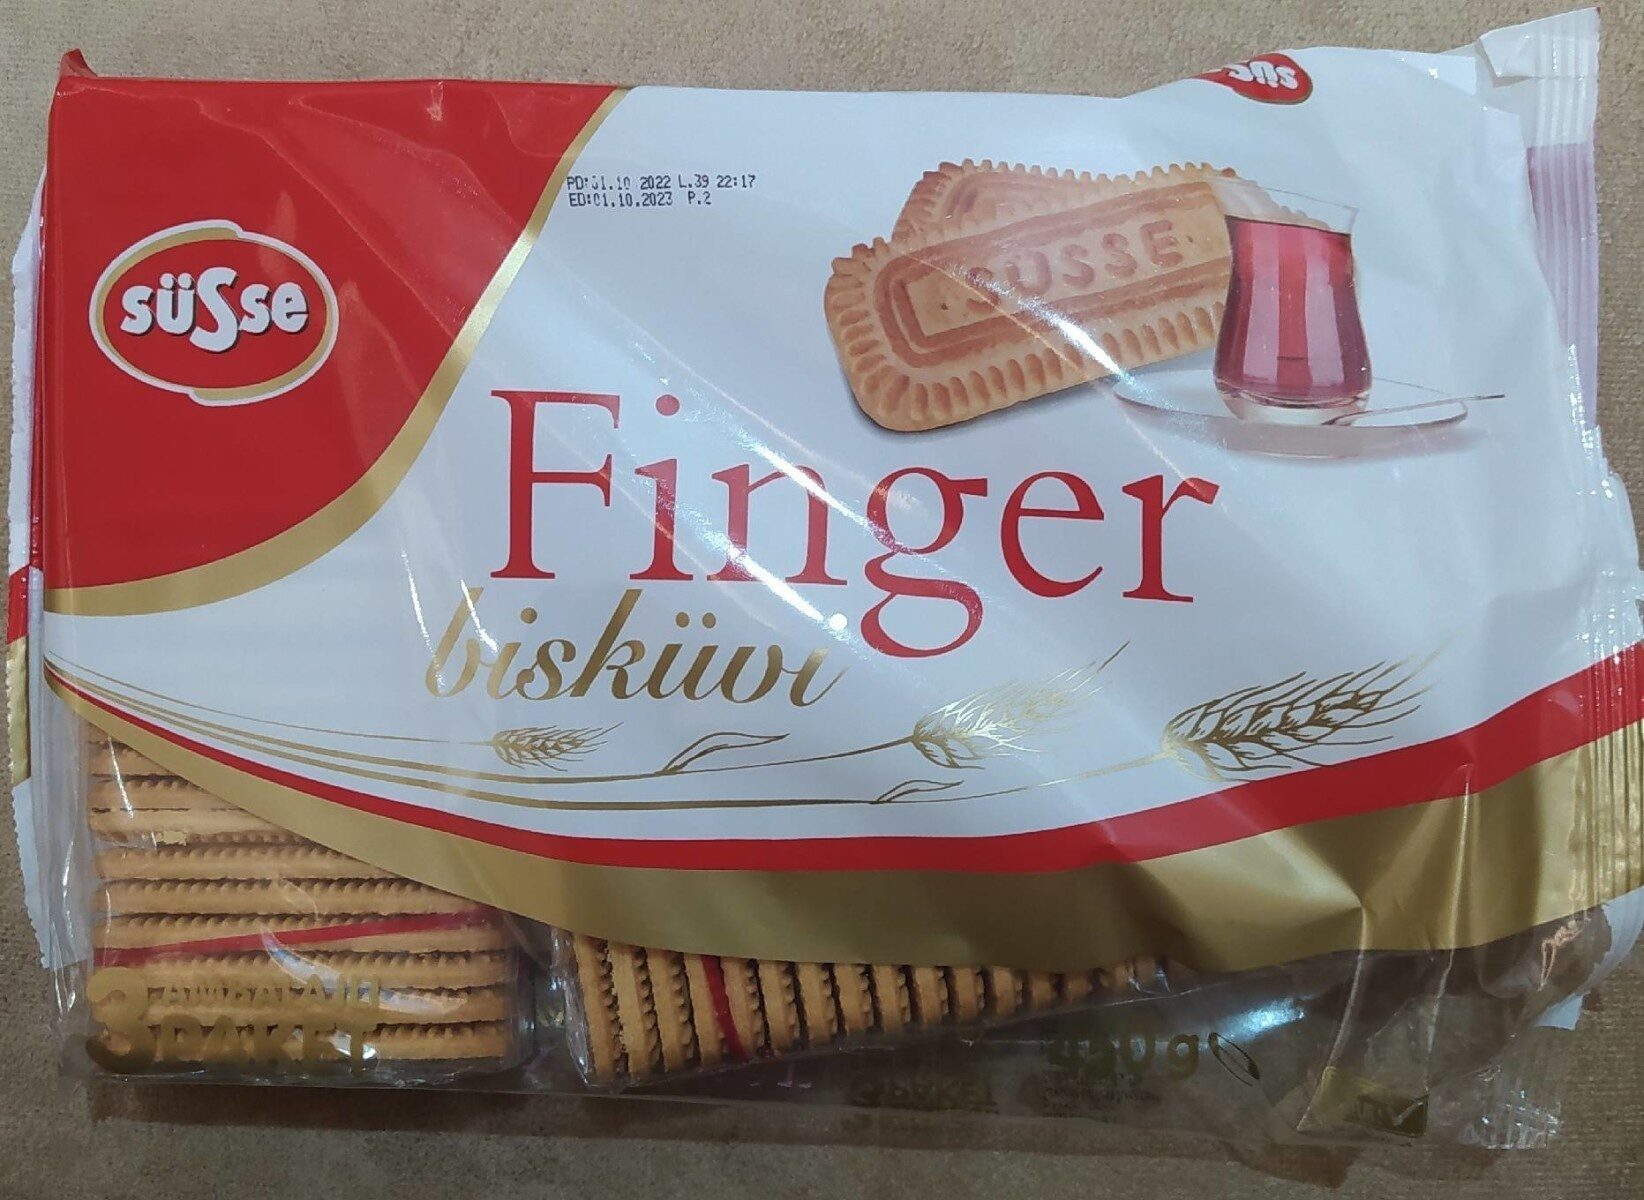 Finger biskiivi - Ürün - en